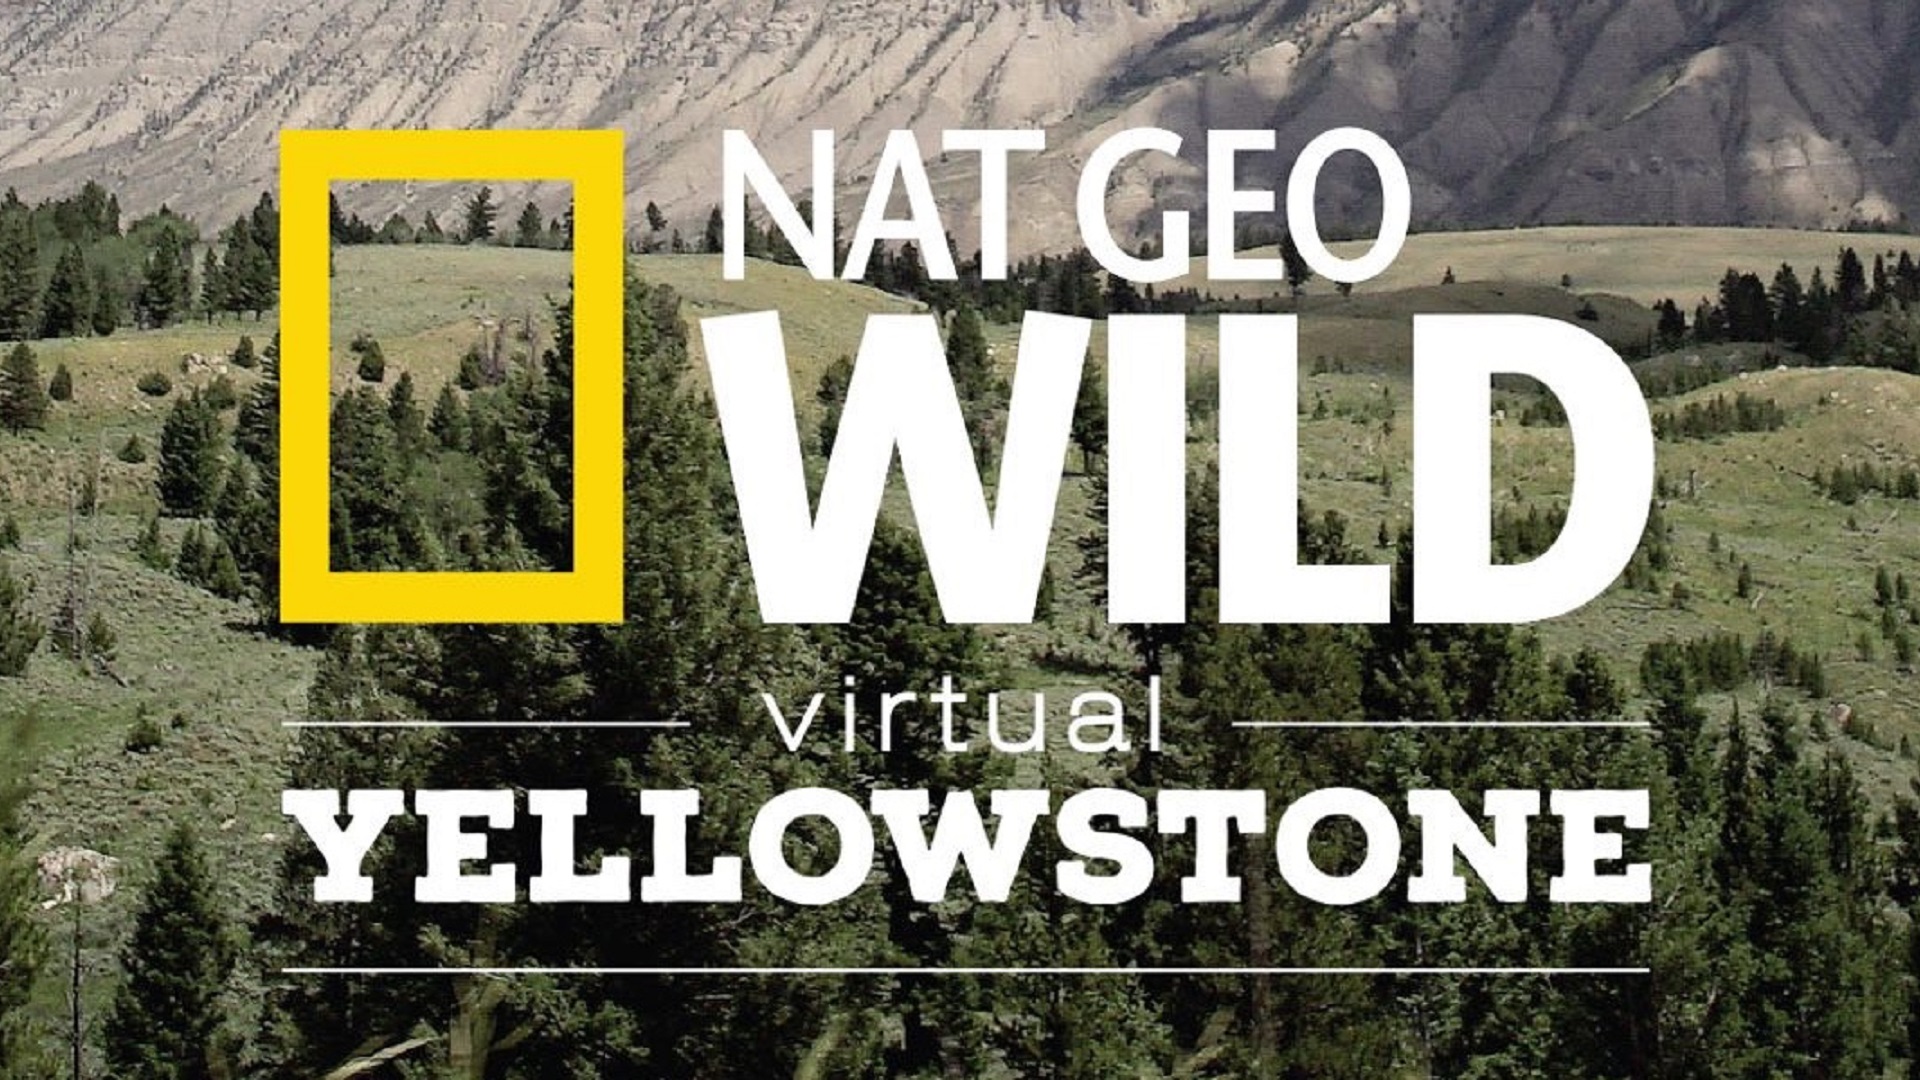 Virtual Yellowstone